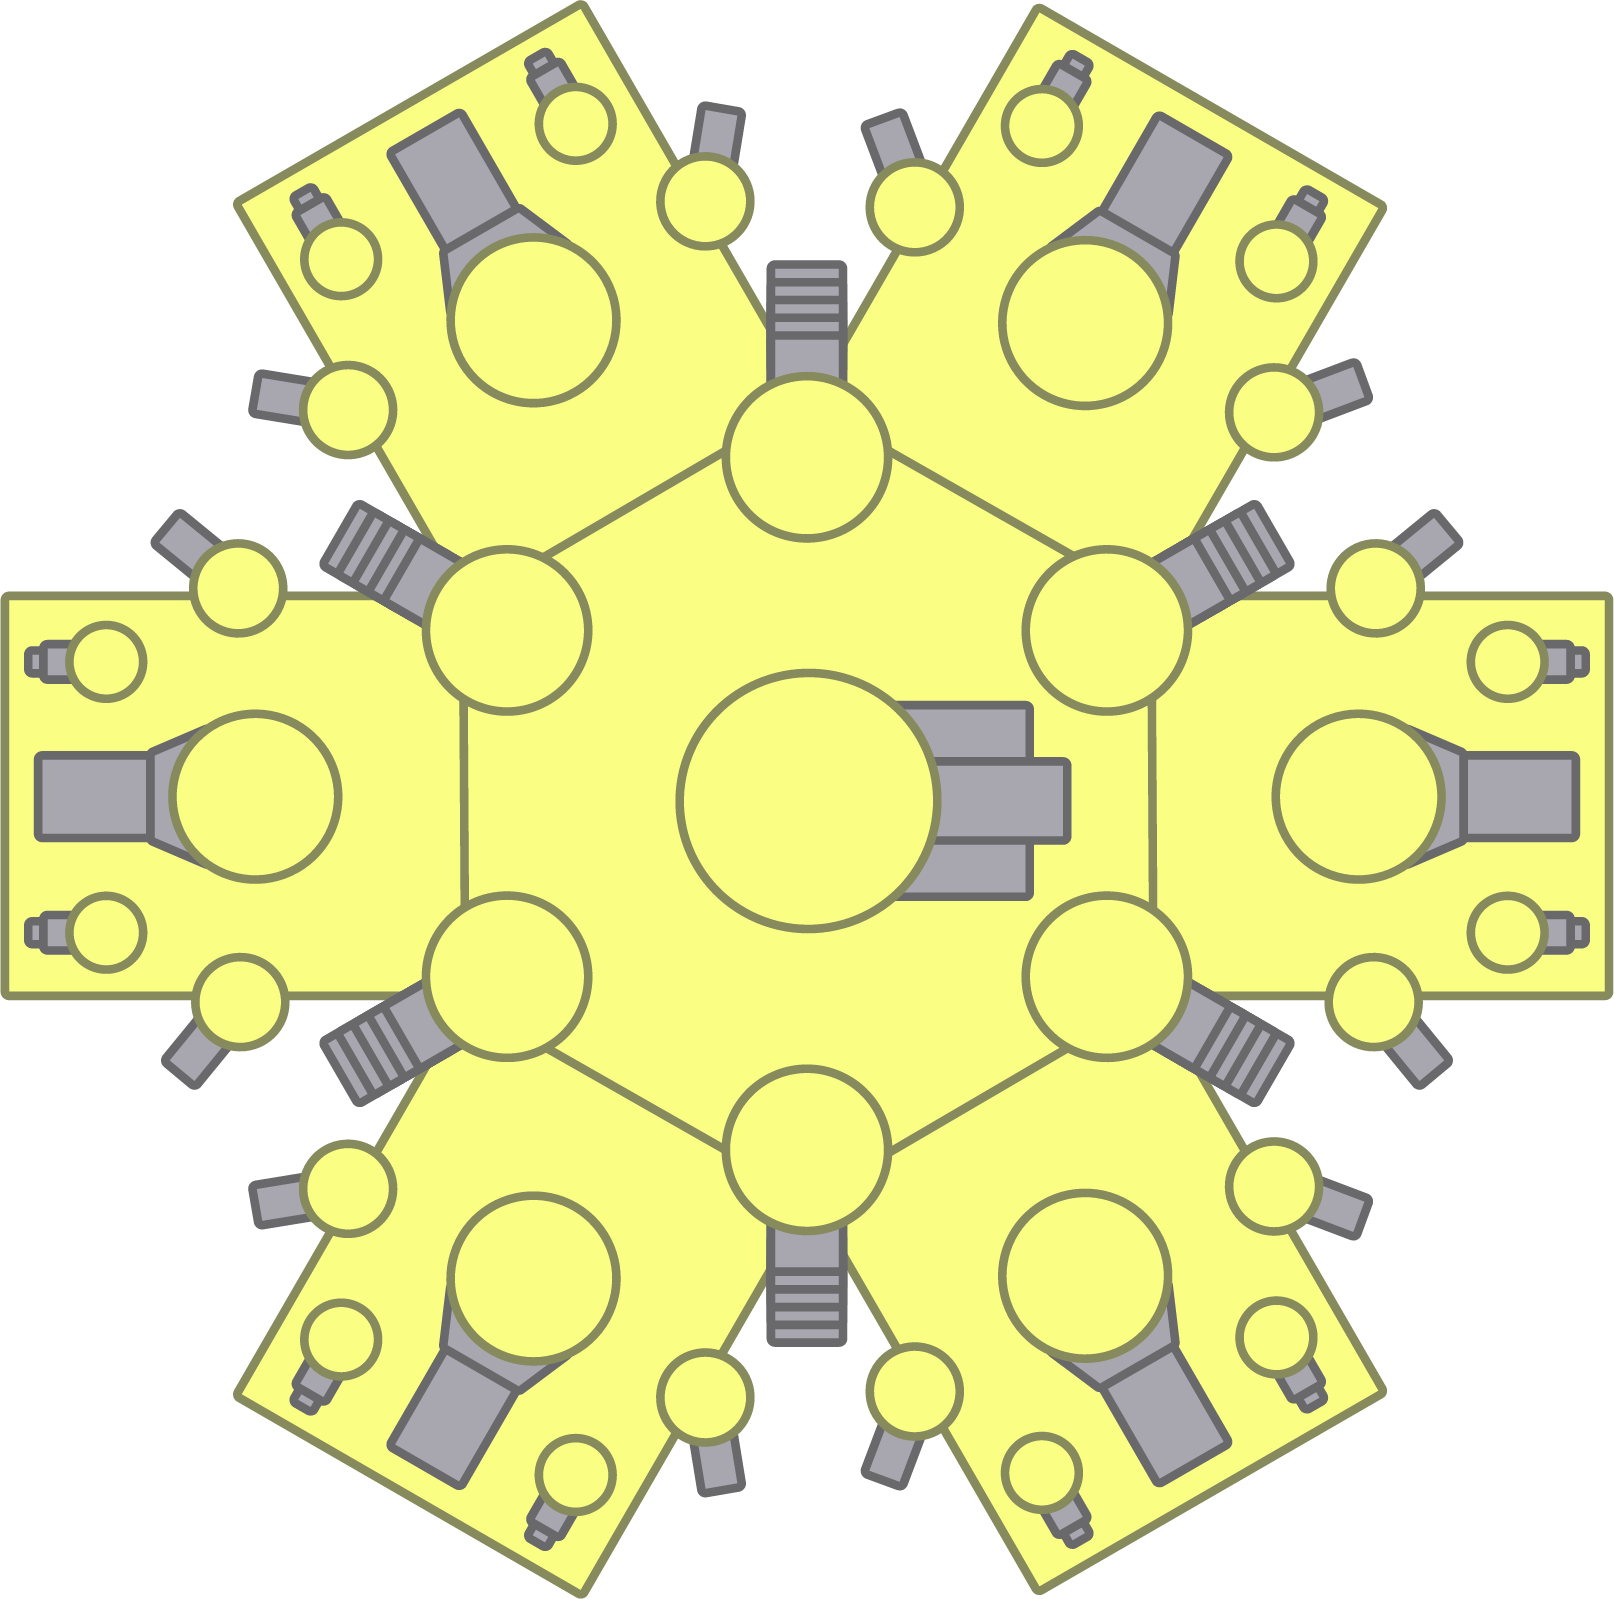 Hexadecimator, woomy-arras.io Wiki